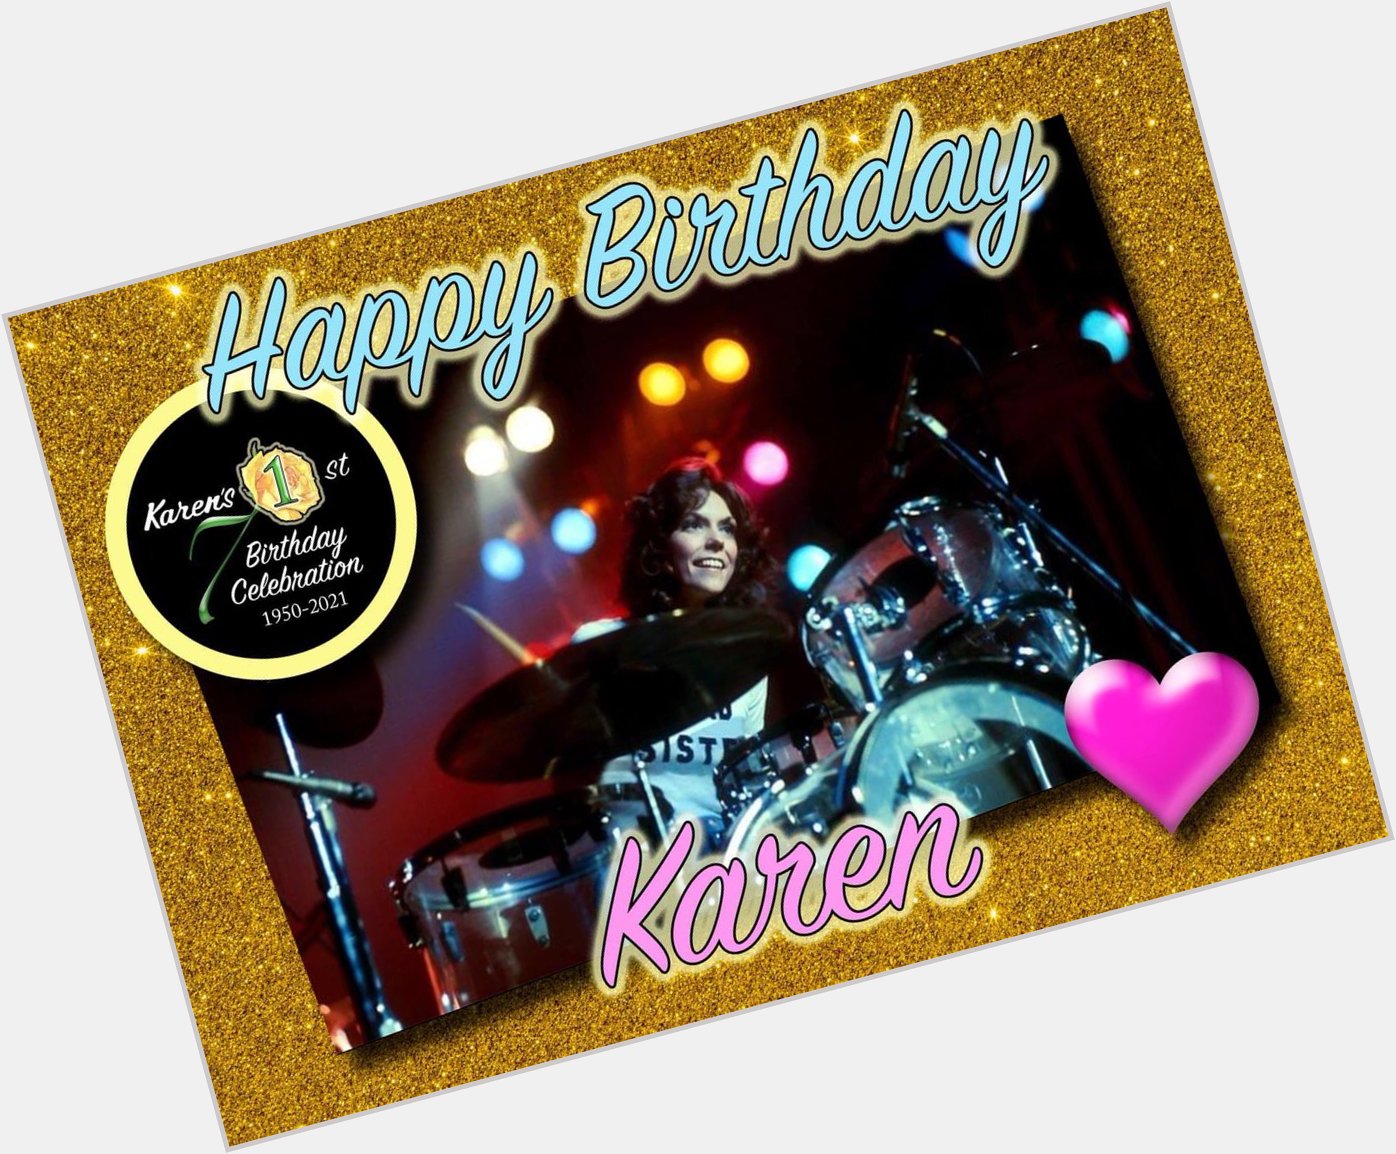 Today, March 2nd marks what would have been Karen Carpenter\s 71st birthday. Happy heavenly birthday, Karen!  